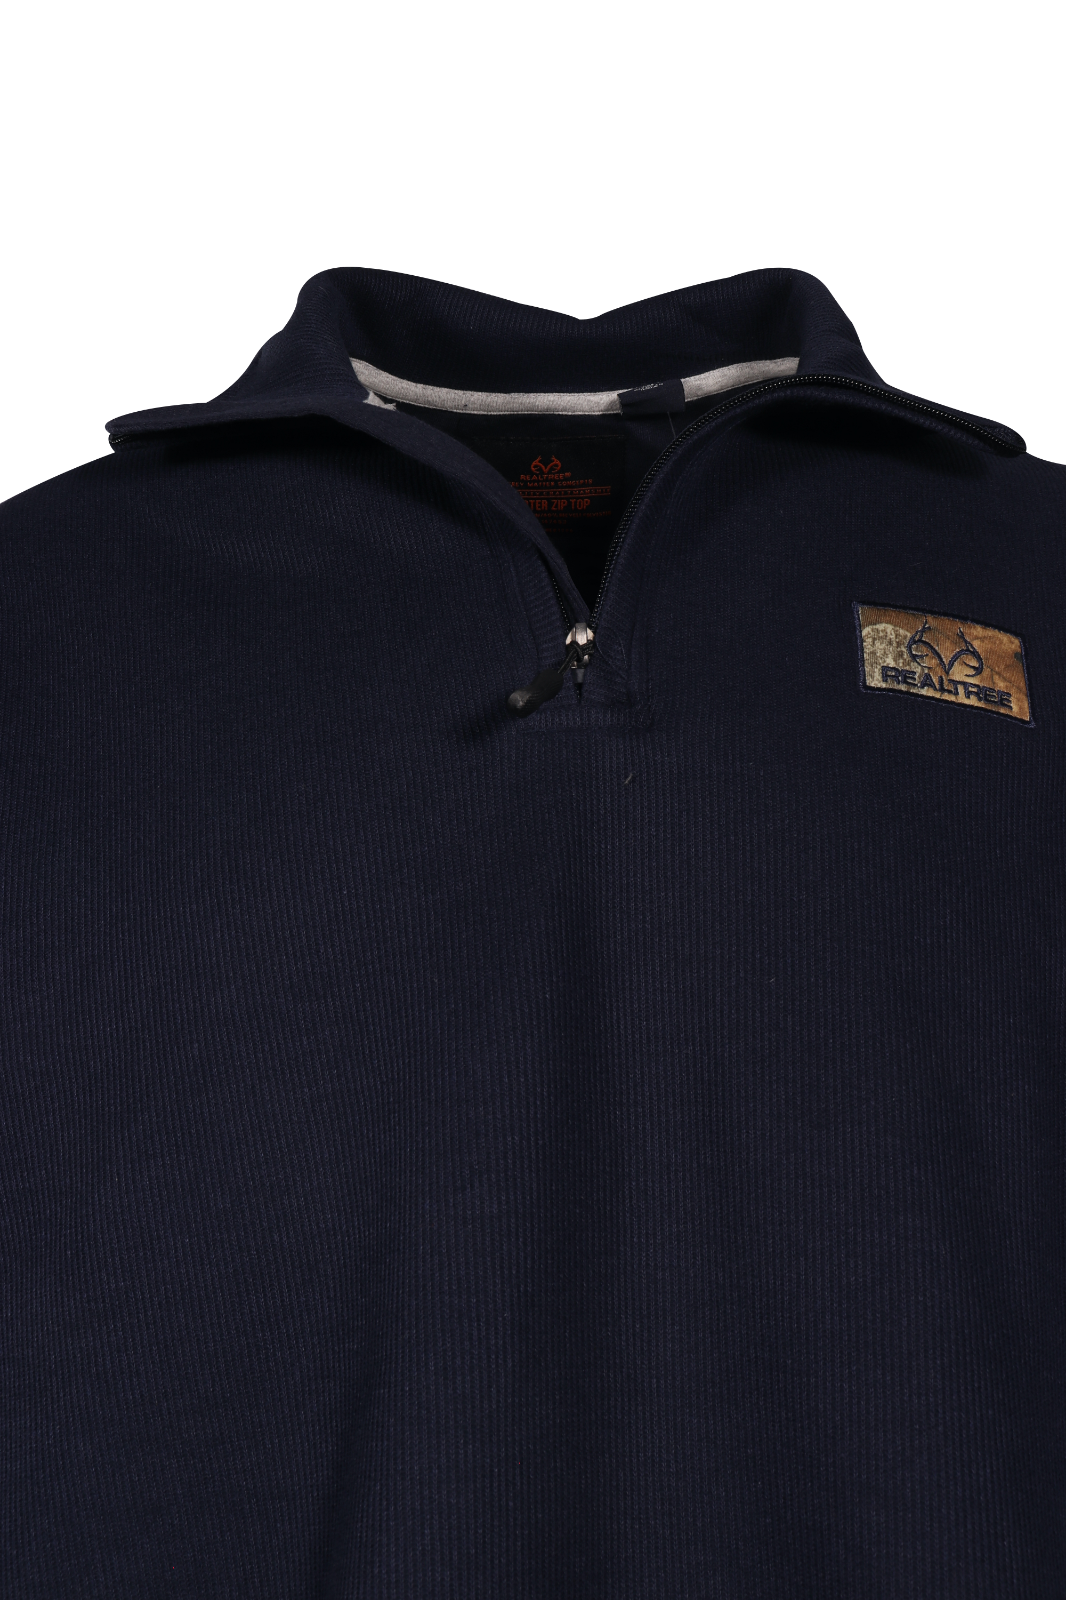 Realtree Men's Sweater Navy Blue Mock Neck Long Sleeve (S02) Size 2XL